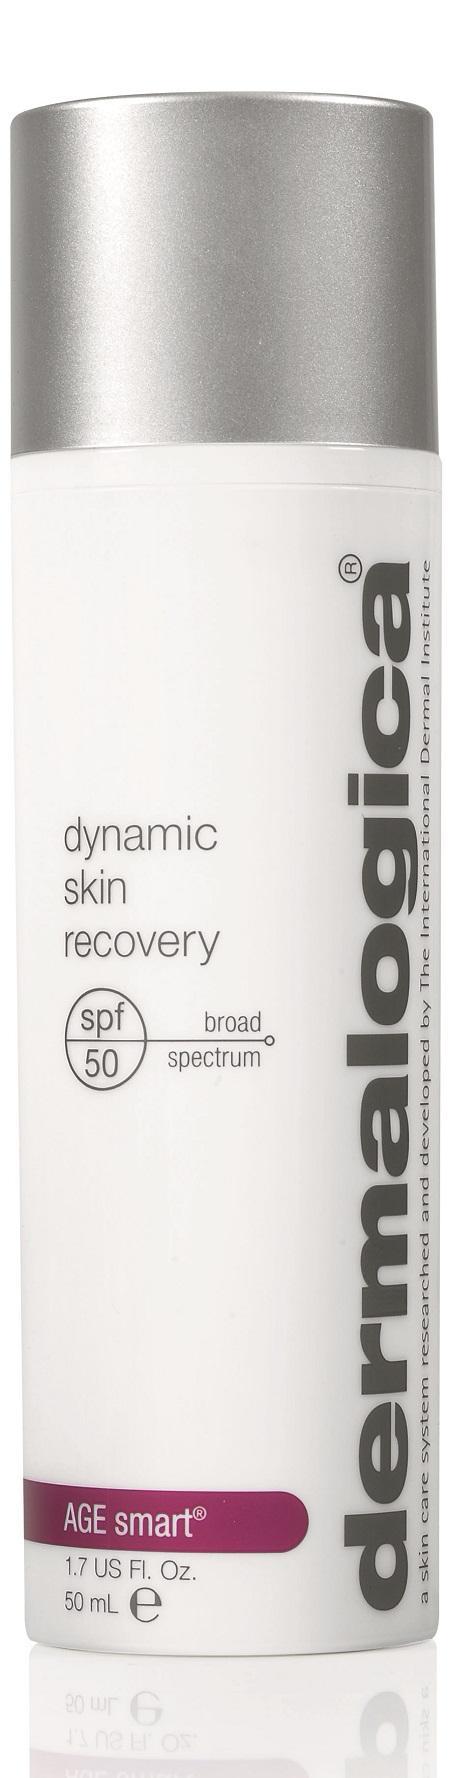 Dermalogica AGE smart Dynamic Skin Recovery SPF50